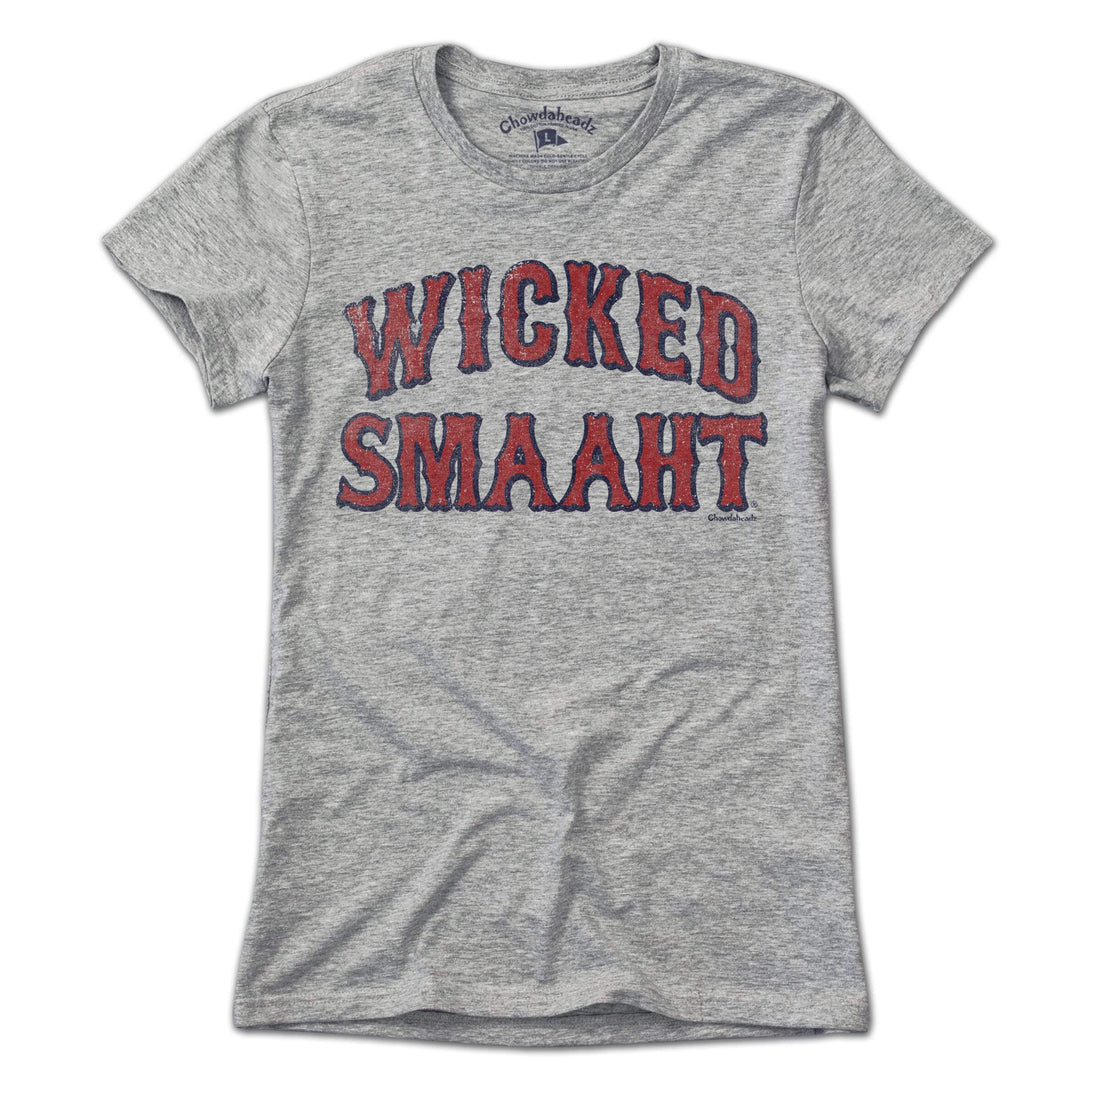 Wicked Smaaht Clubhouse T-shirt - Chowdaheadz